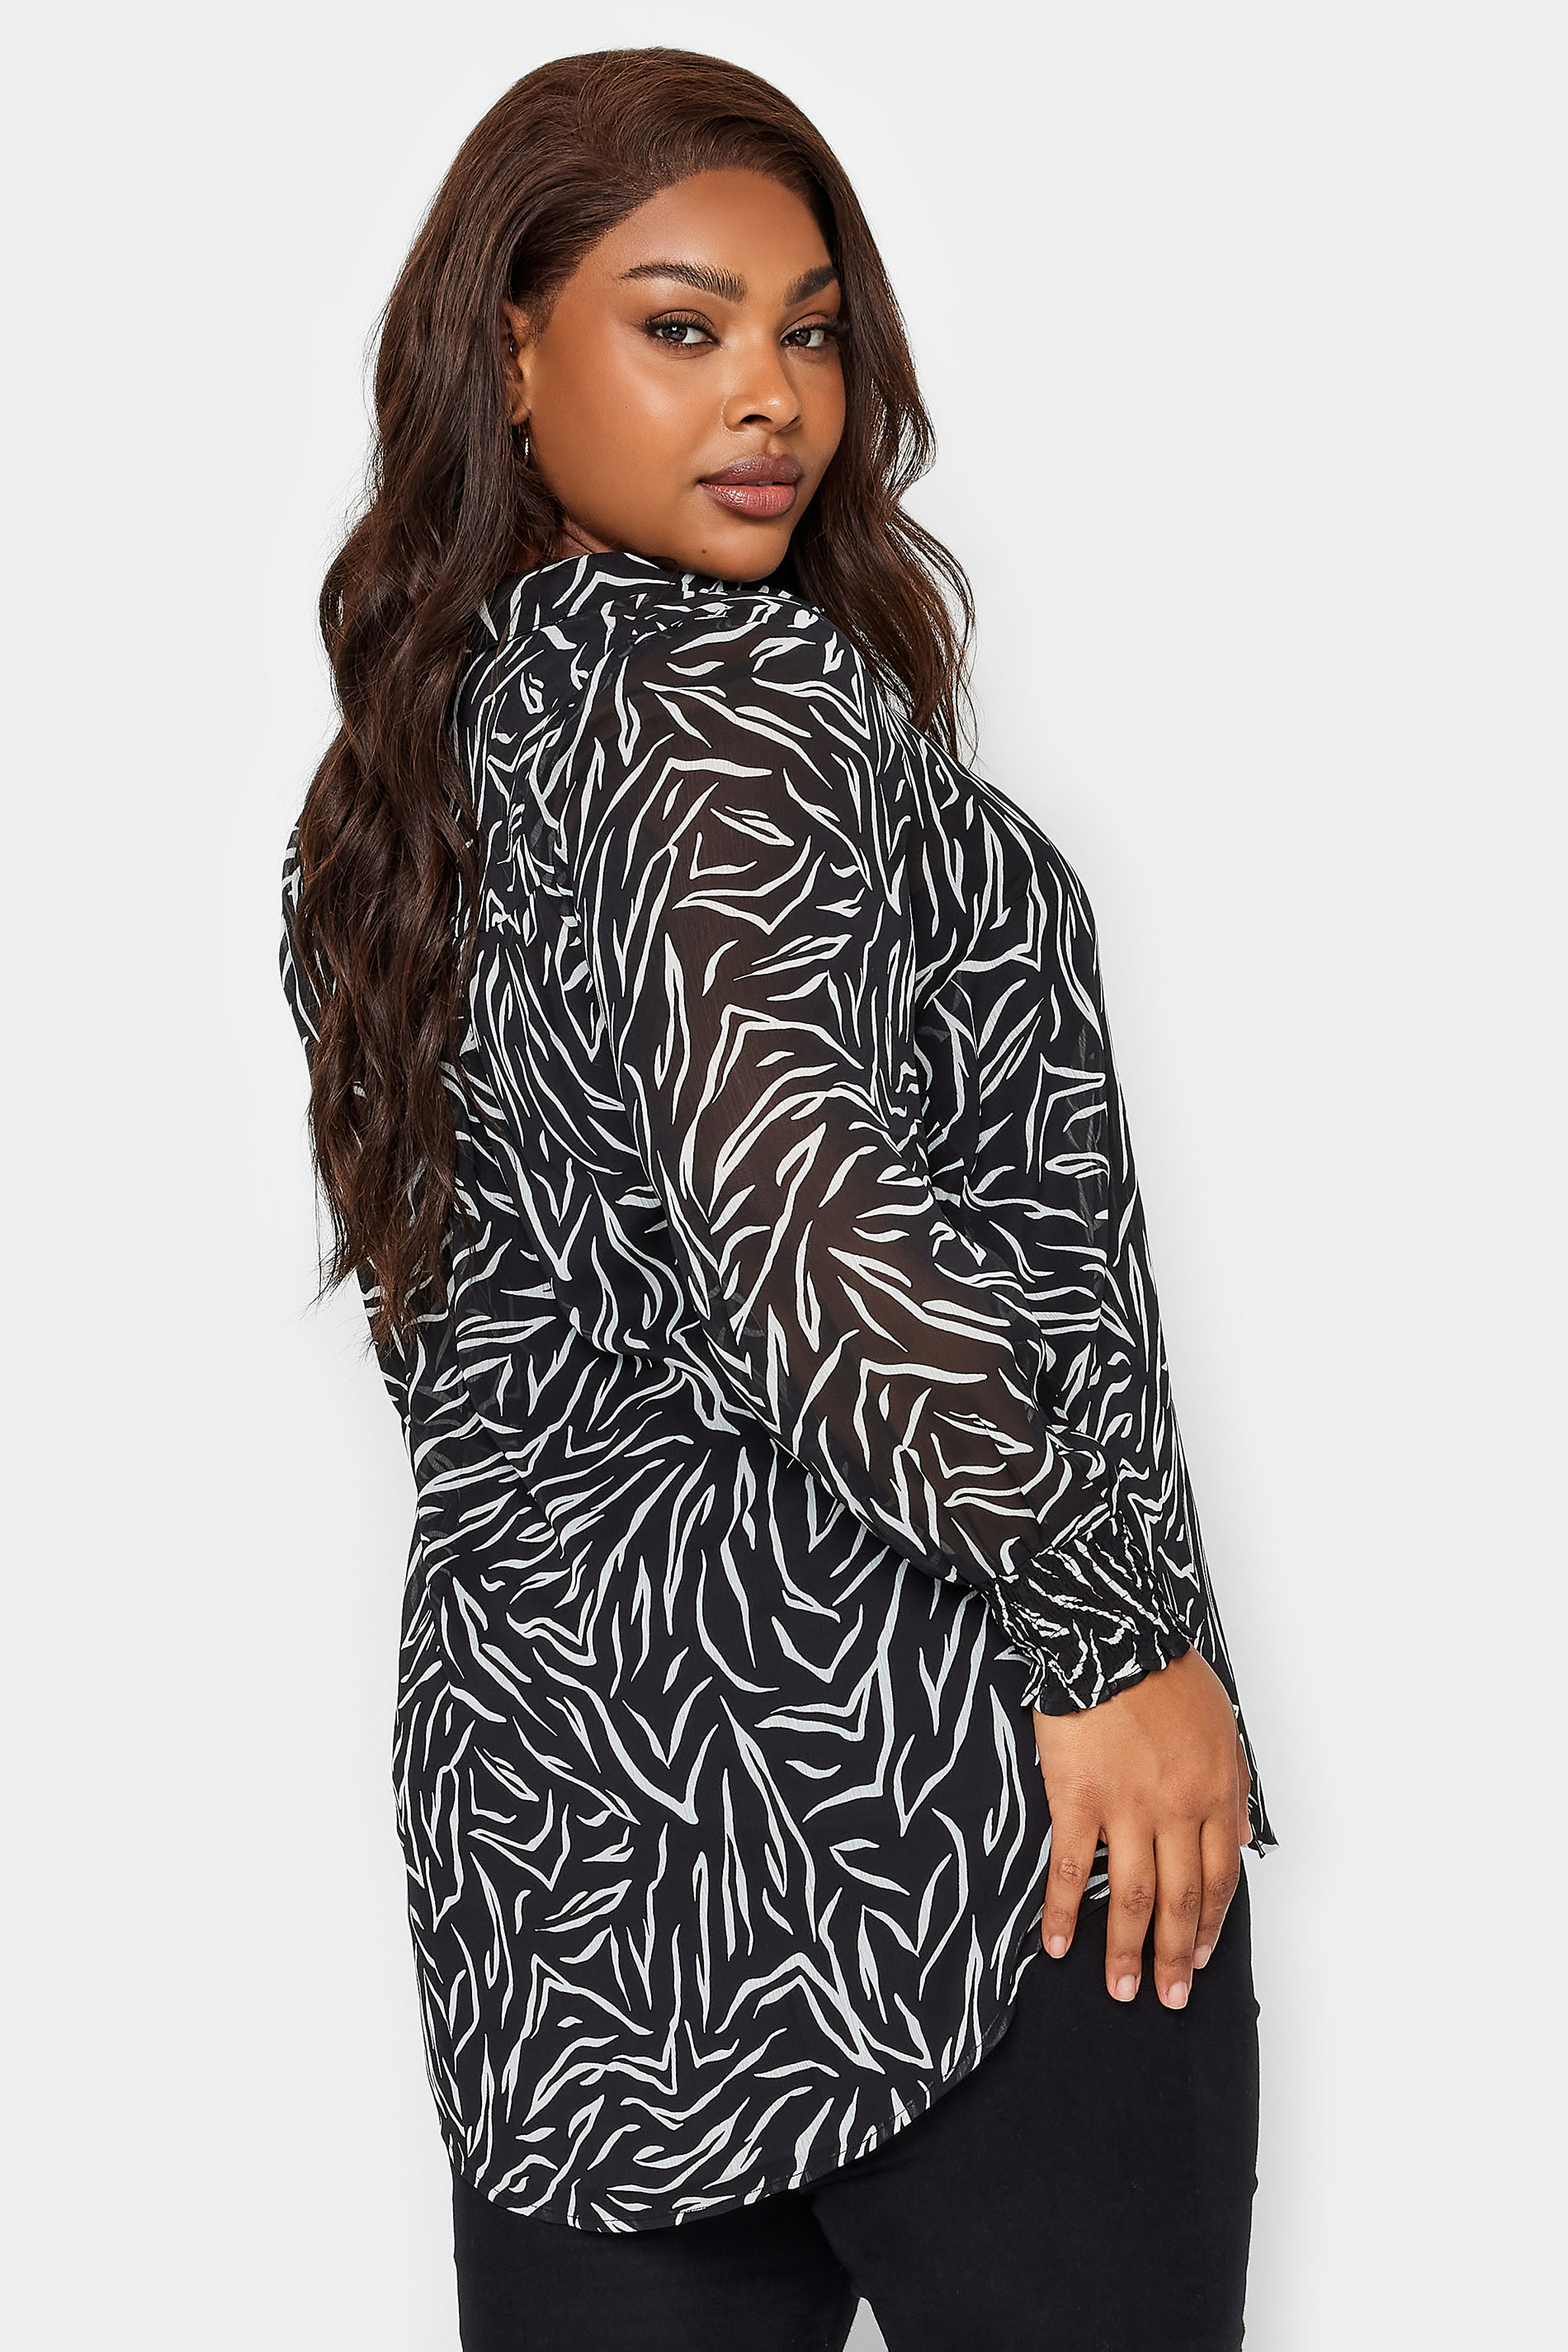 YOURS Plus Size Black Zebra Print Blouse | Yours Clothing 3